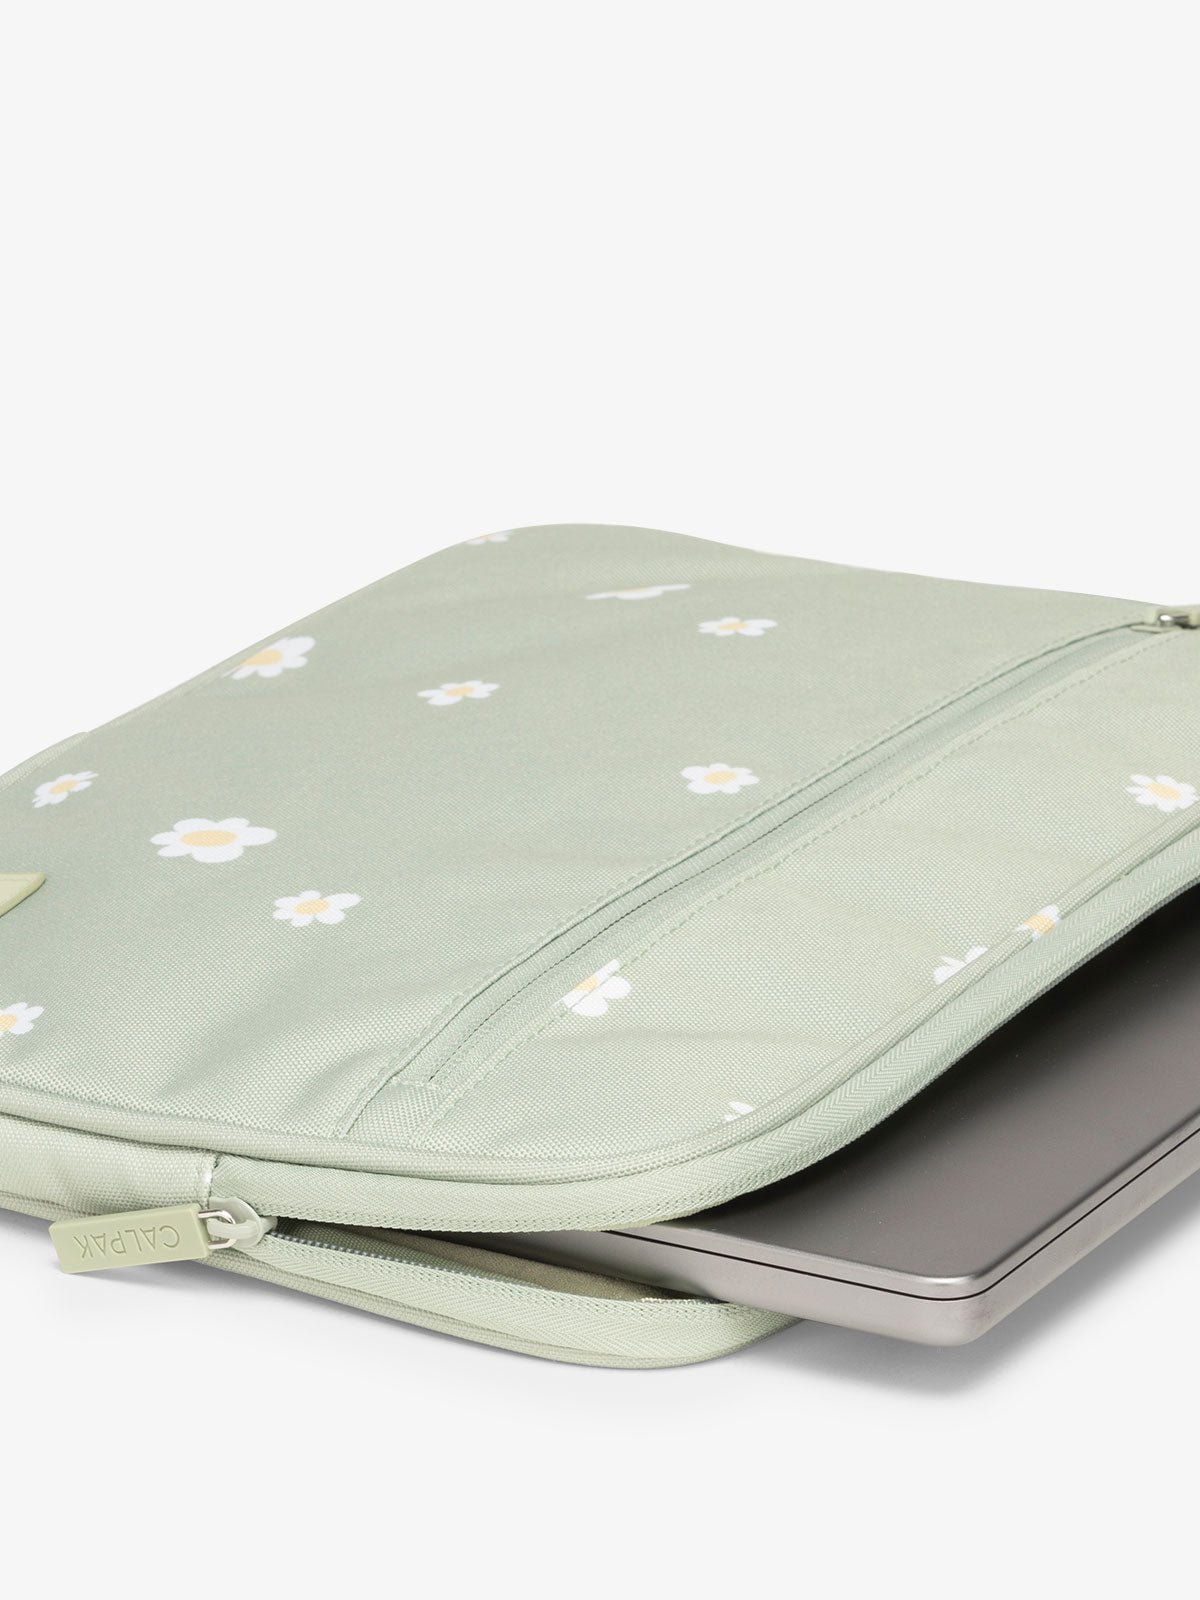 CALPAK 15-17" laptop sleeve with front zipper pouch